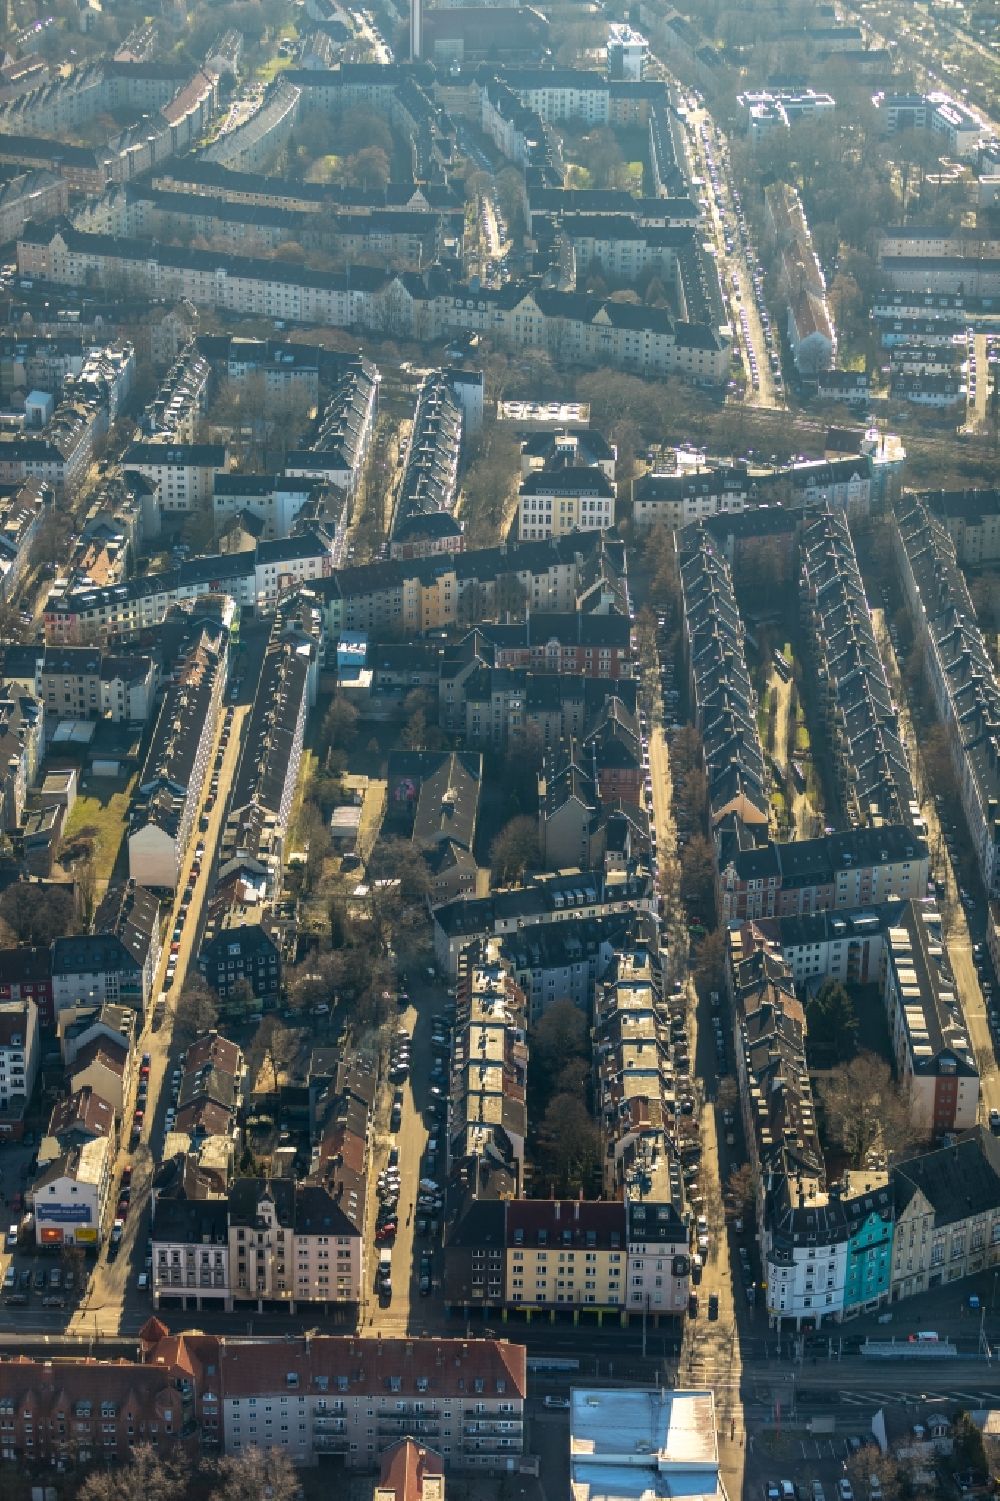 Aerial photograph Dortmund - Residential area a row house settlement Unionstrasse - Adlerstrasse in the district Dorstfelder Bruecke in Dortmund in the state North Rhine-Westphalia, Germany